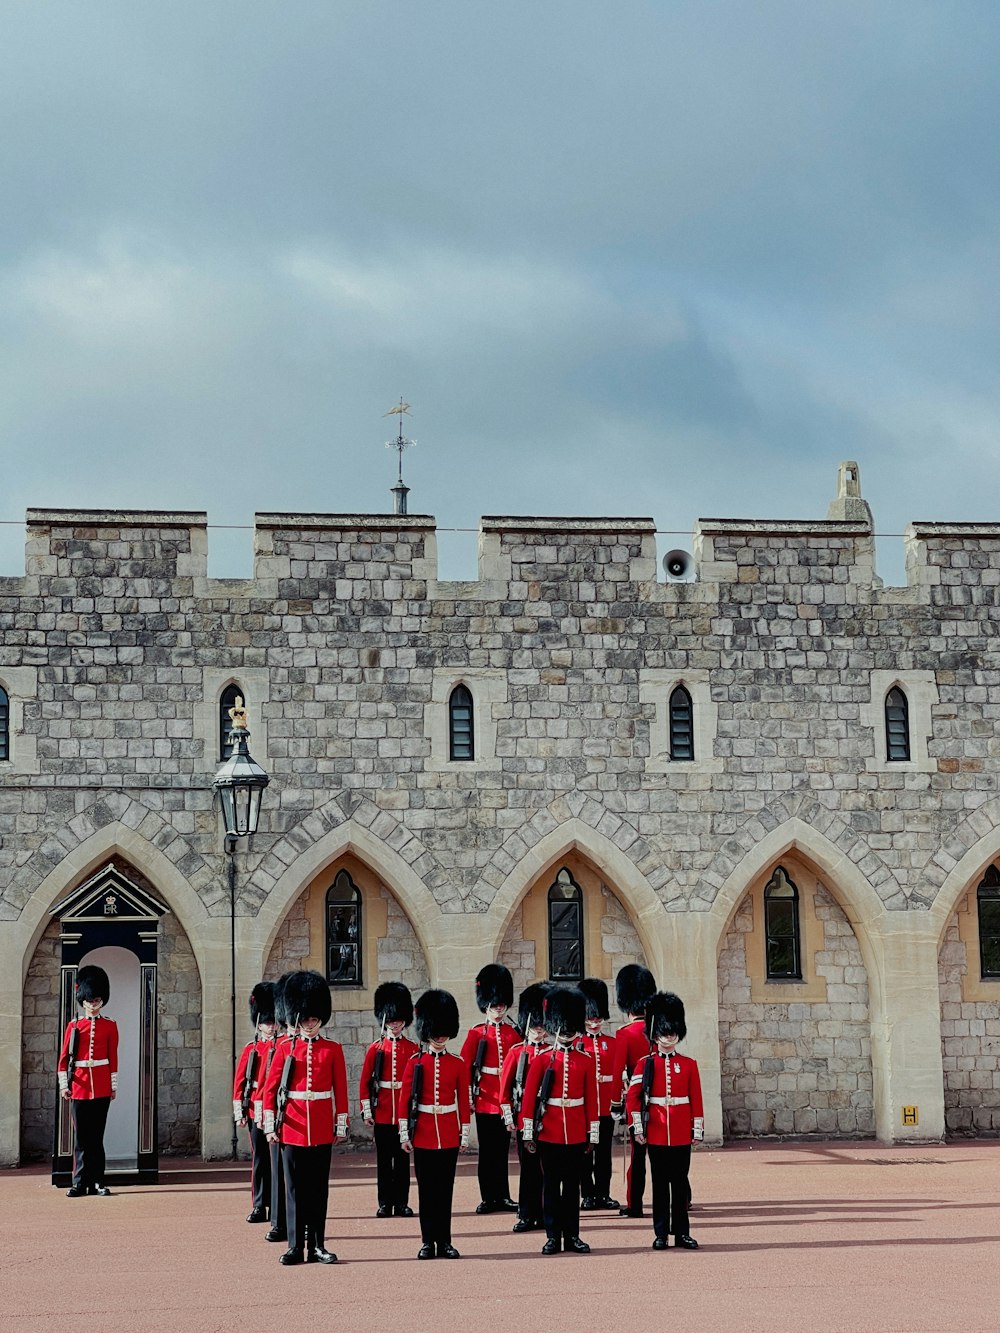 Un grupo de hombres con uniformes rojos parados frente a un castillo